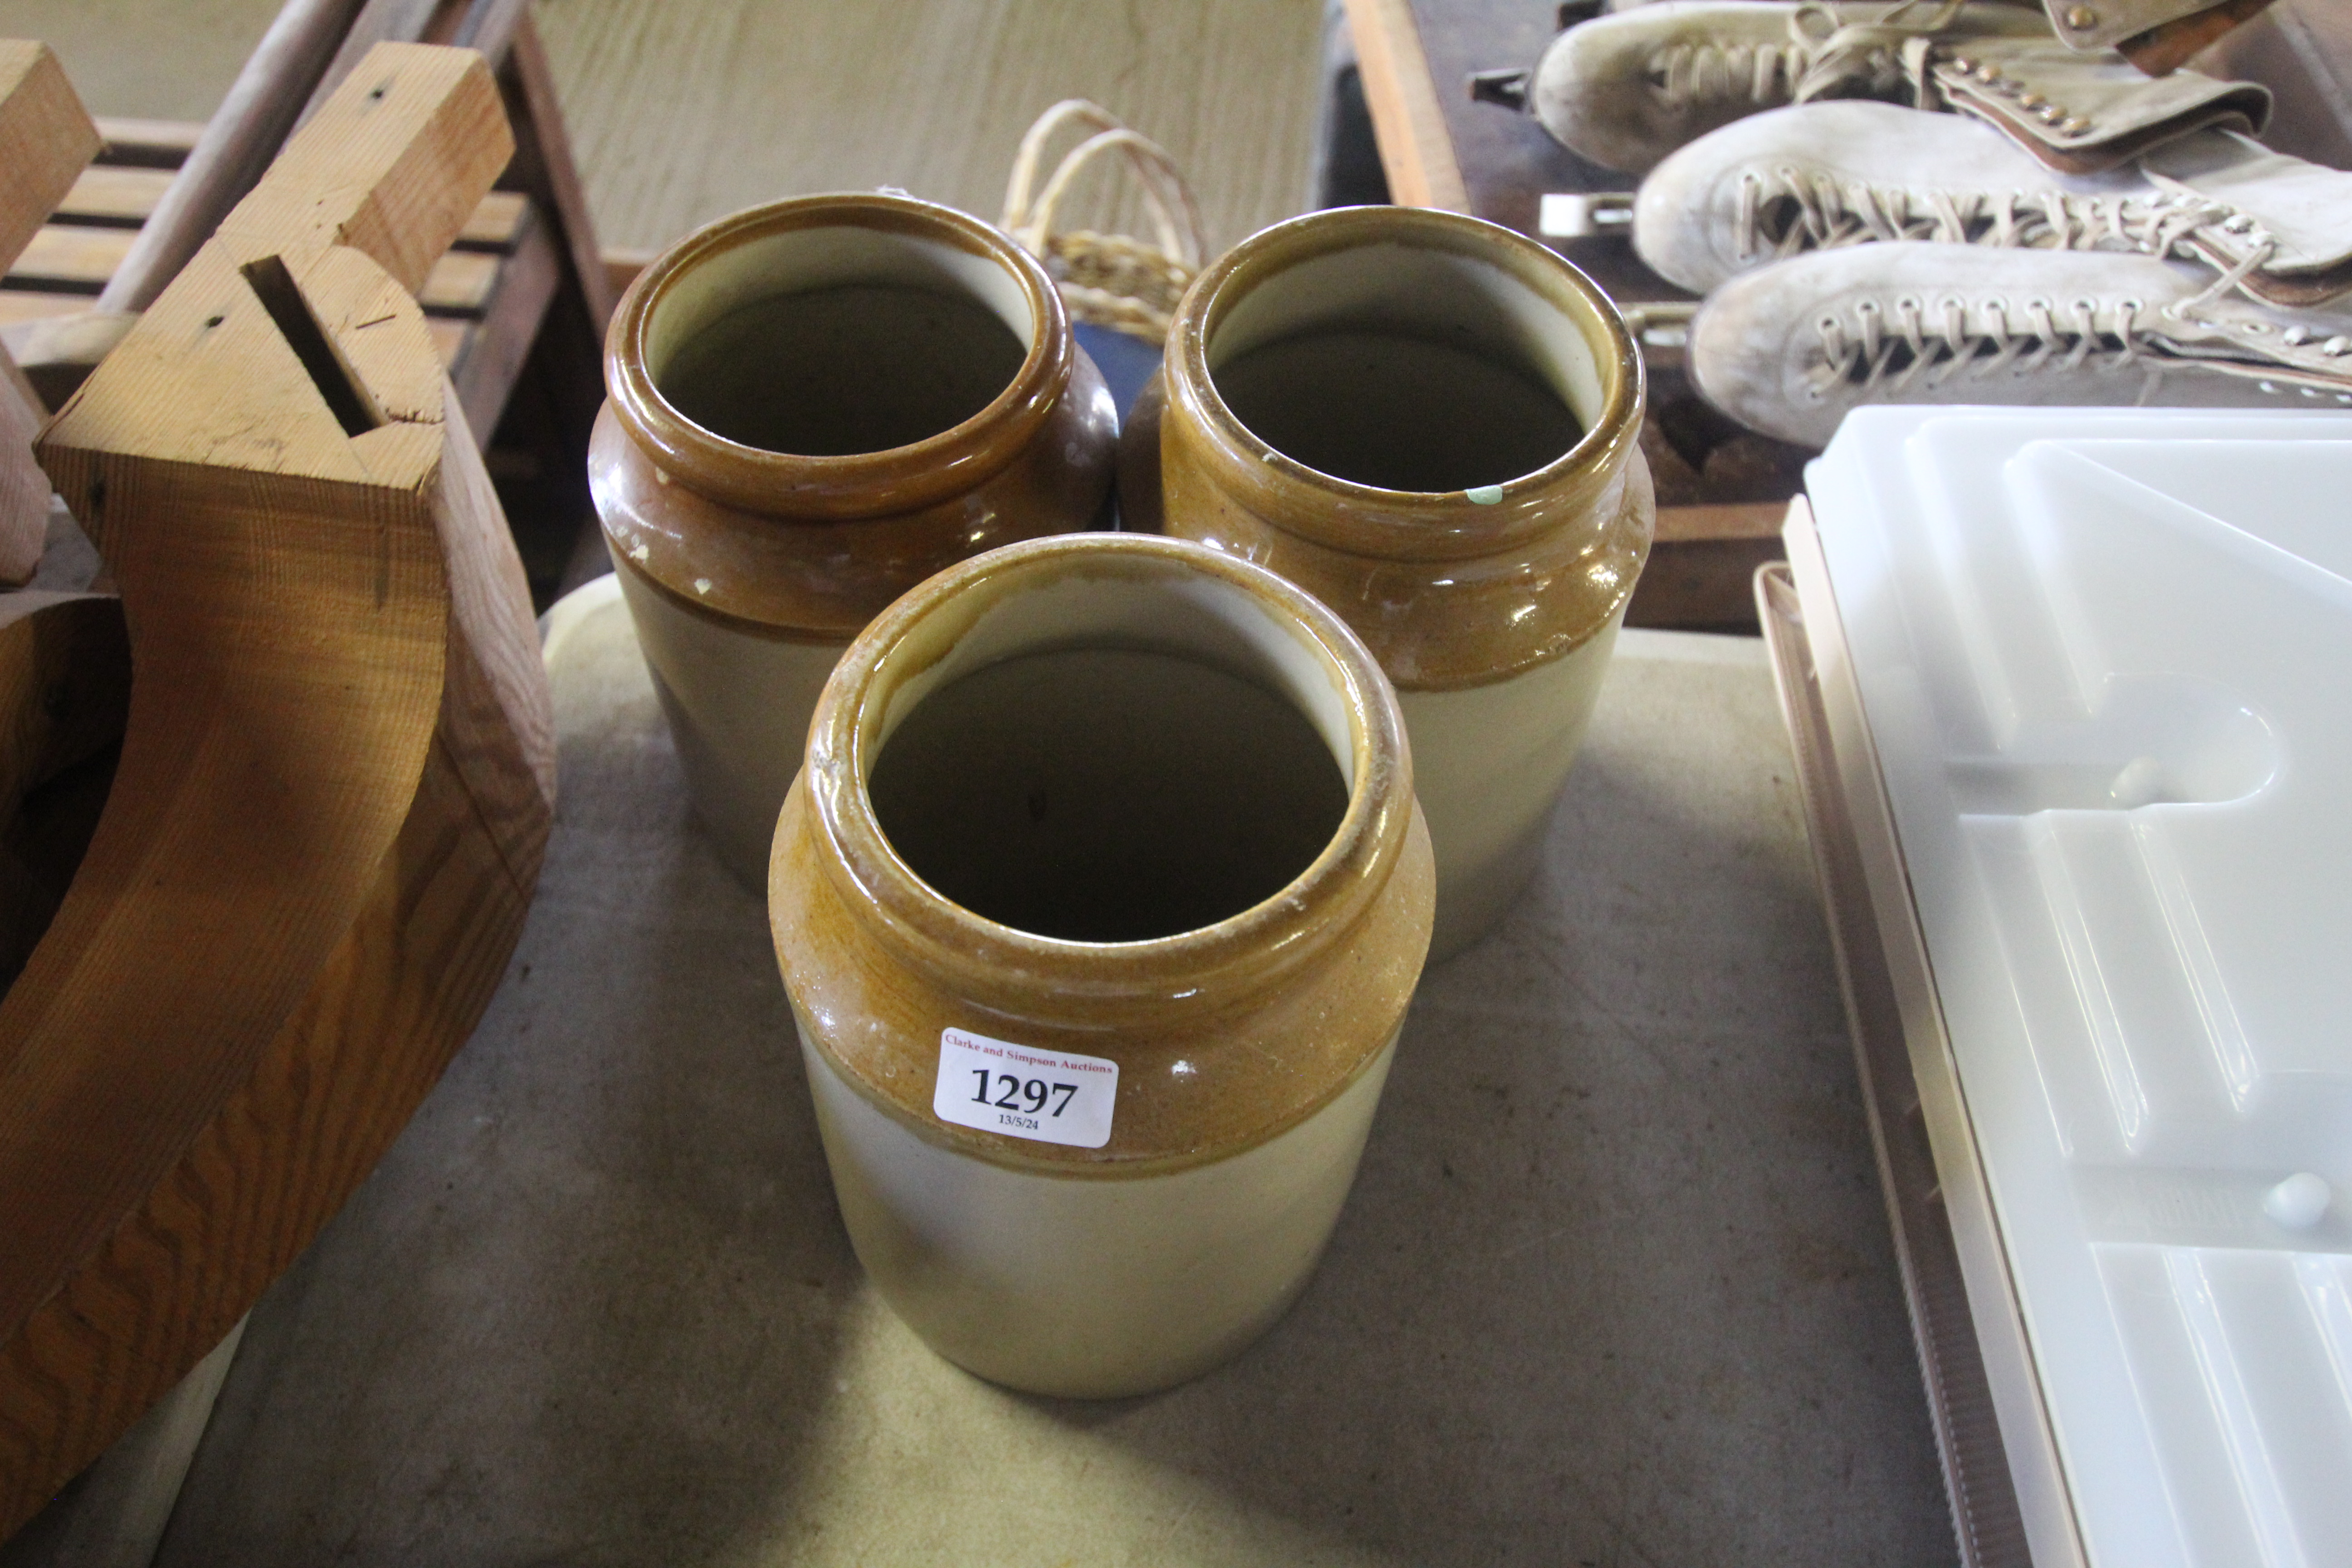 Three partly glazed stoneware jars